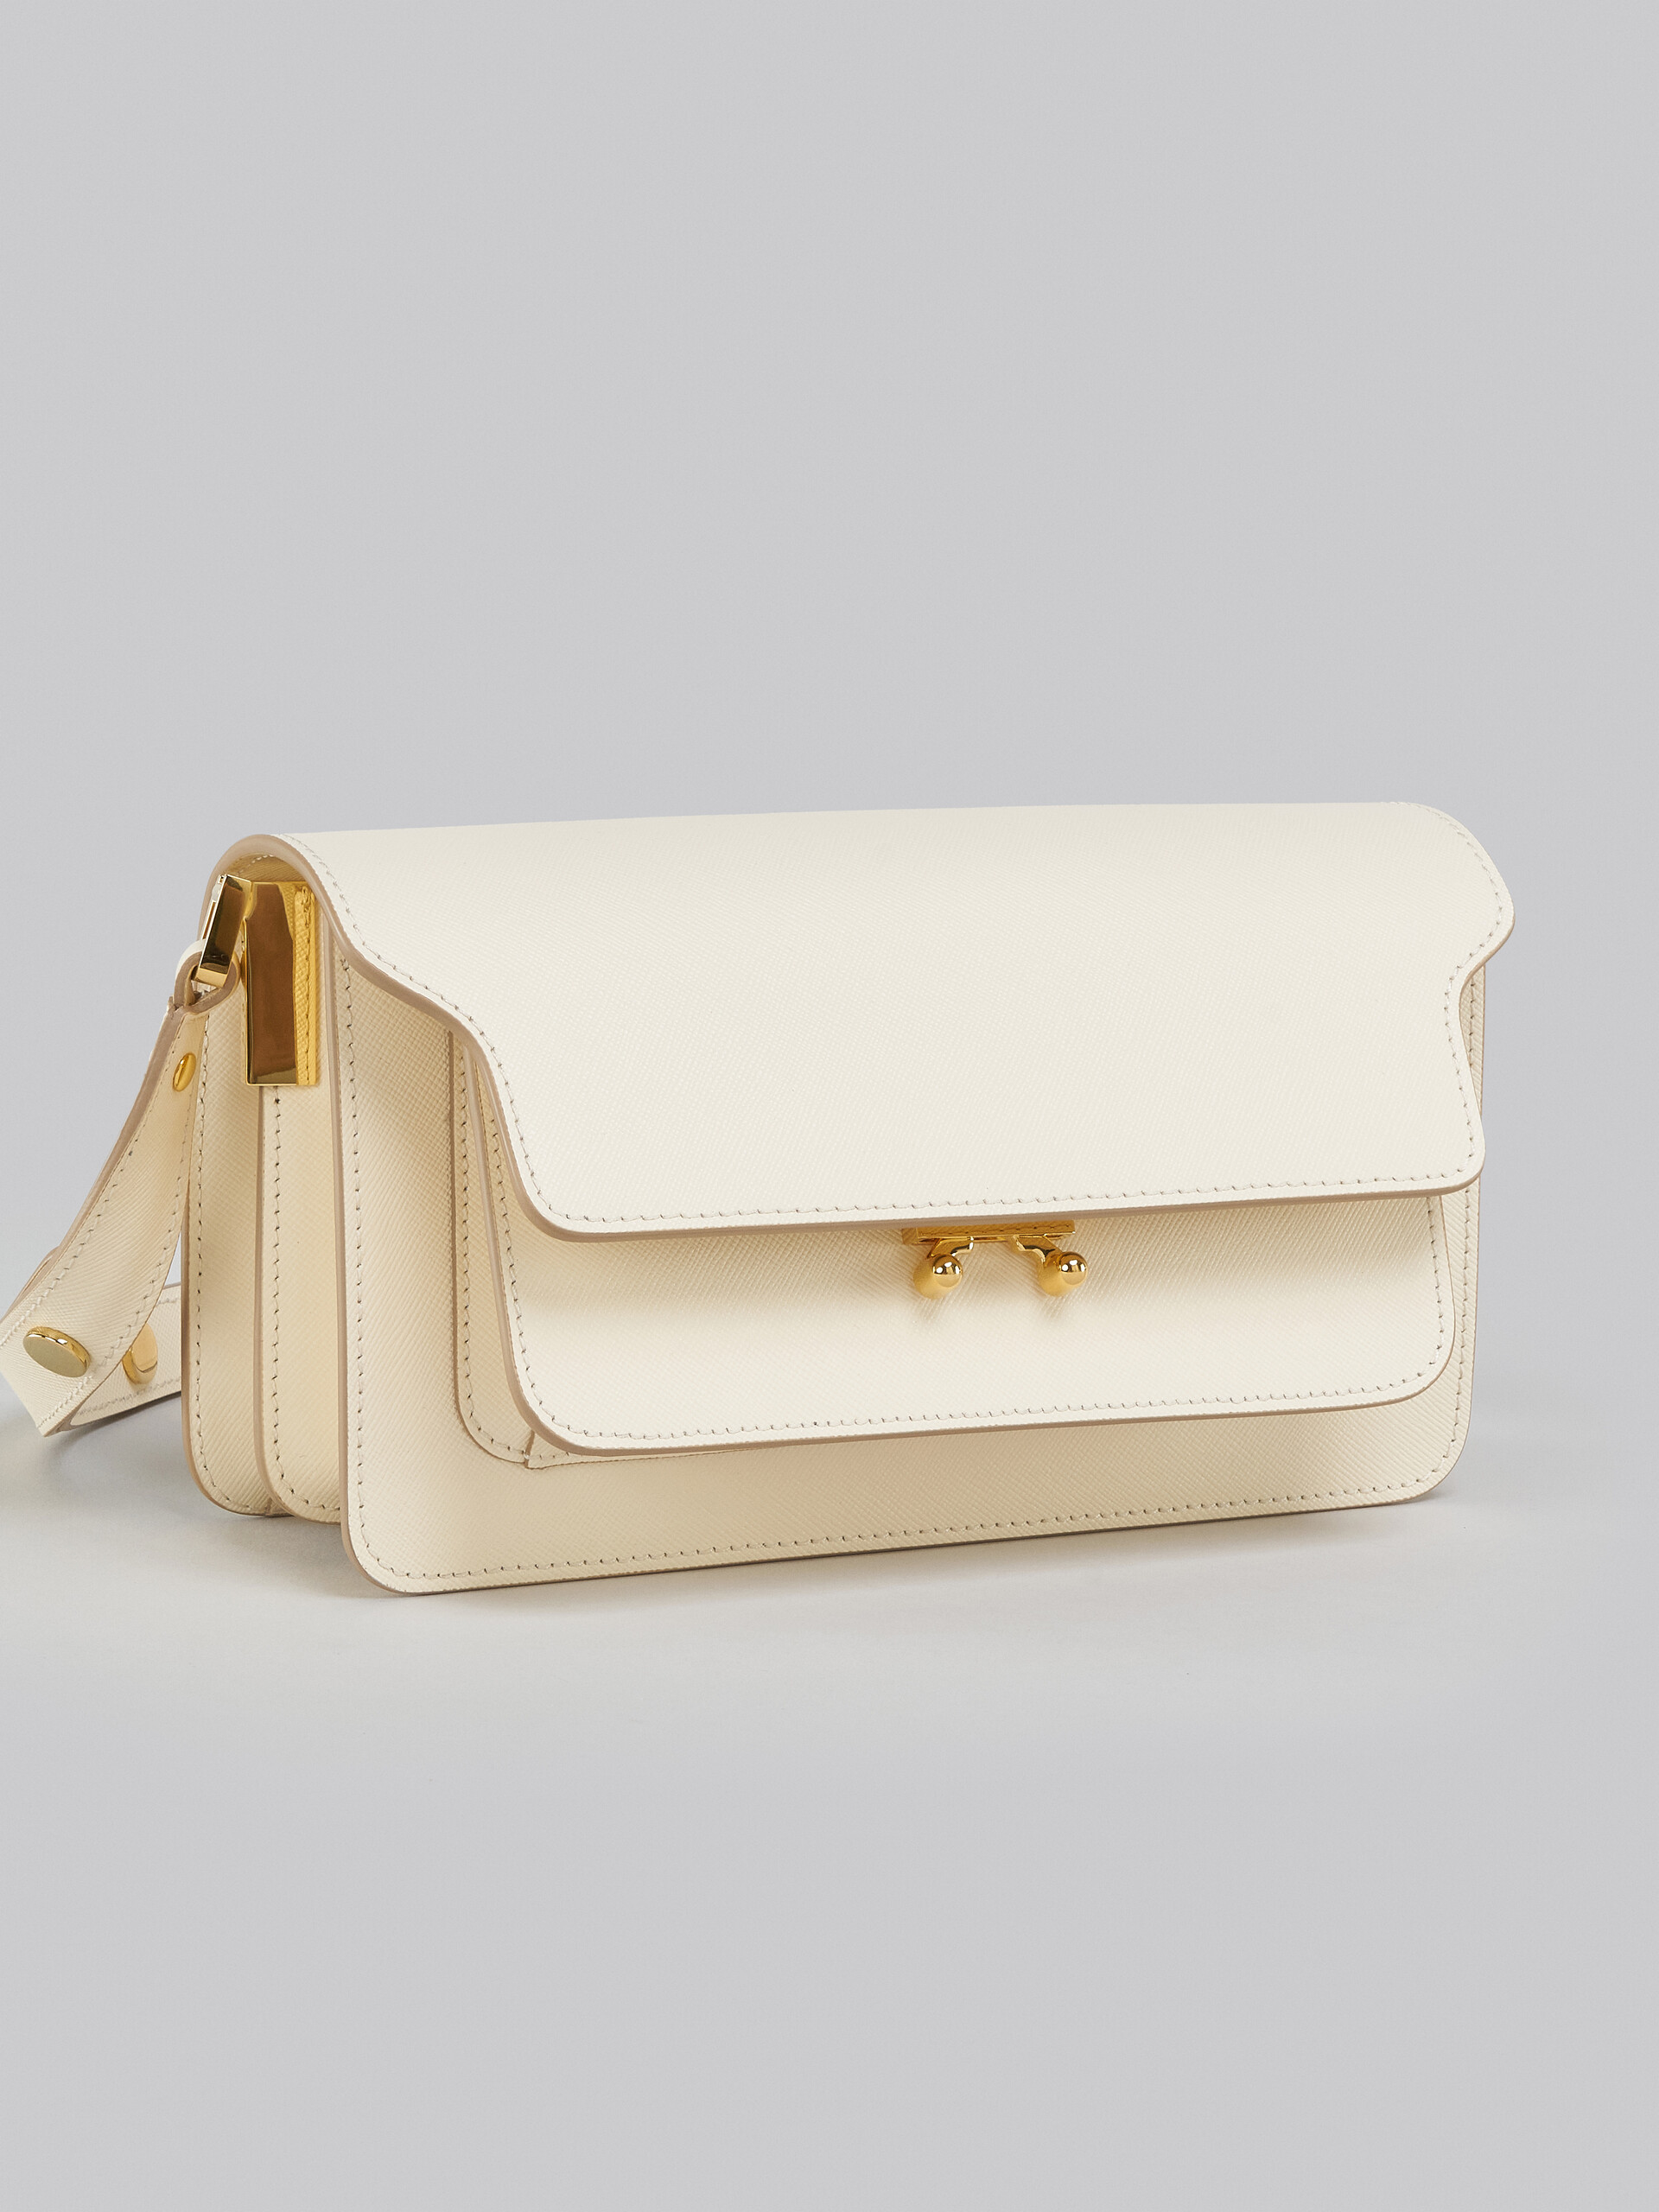 Marni Color Block Saffiano Leather Mini Trunk Bag Camel